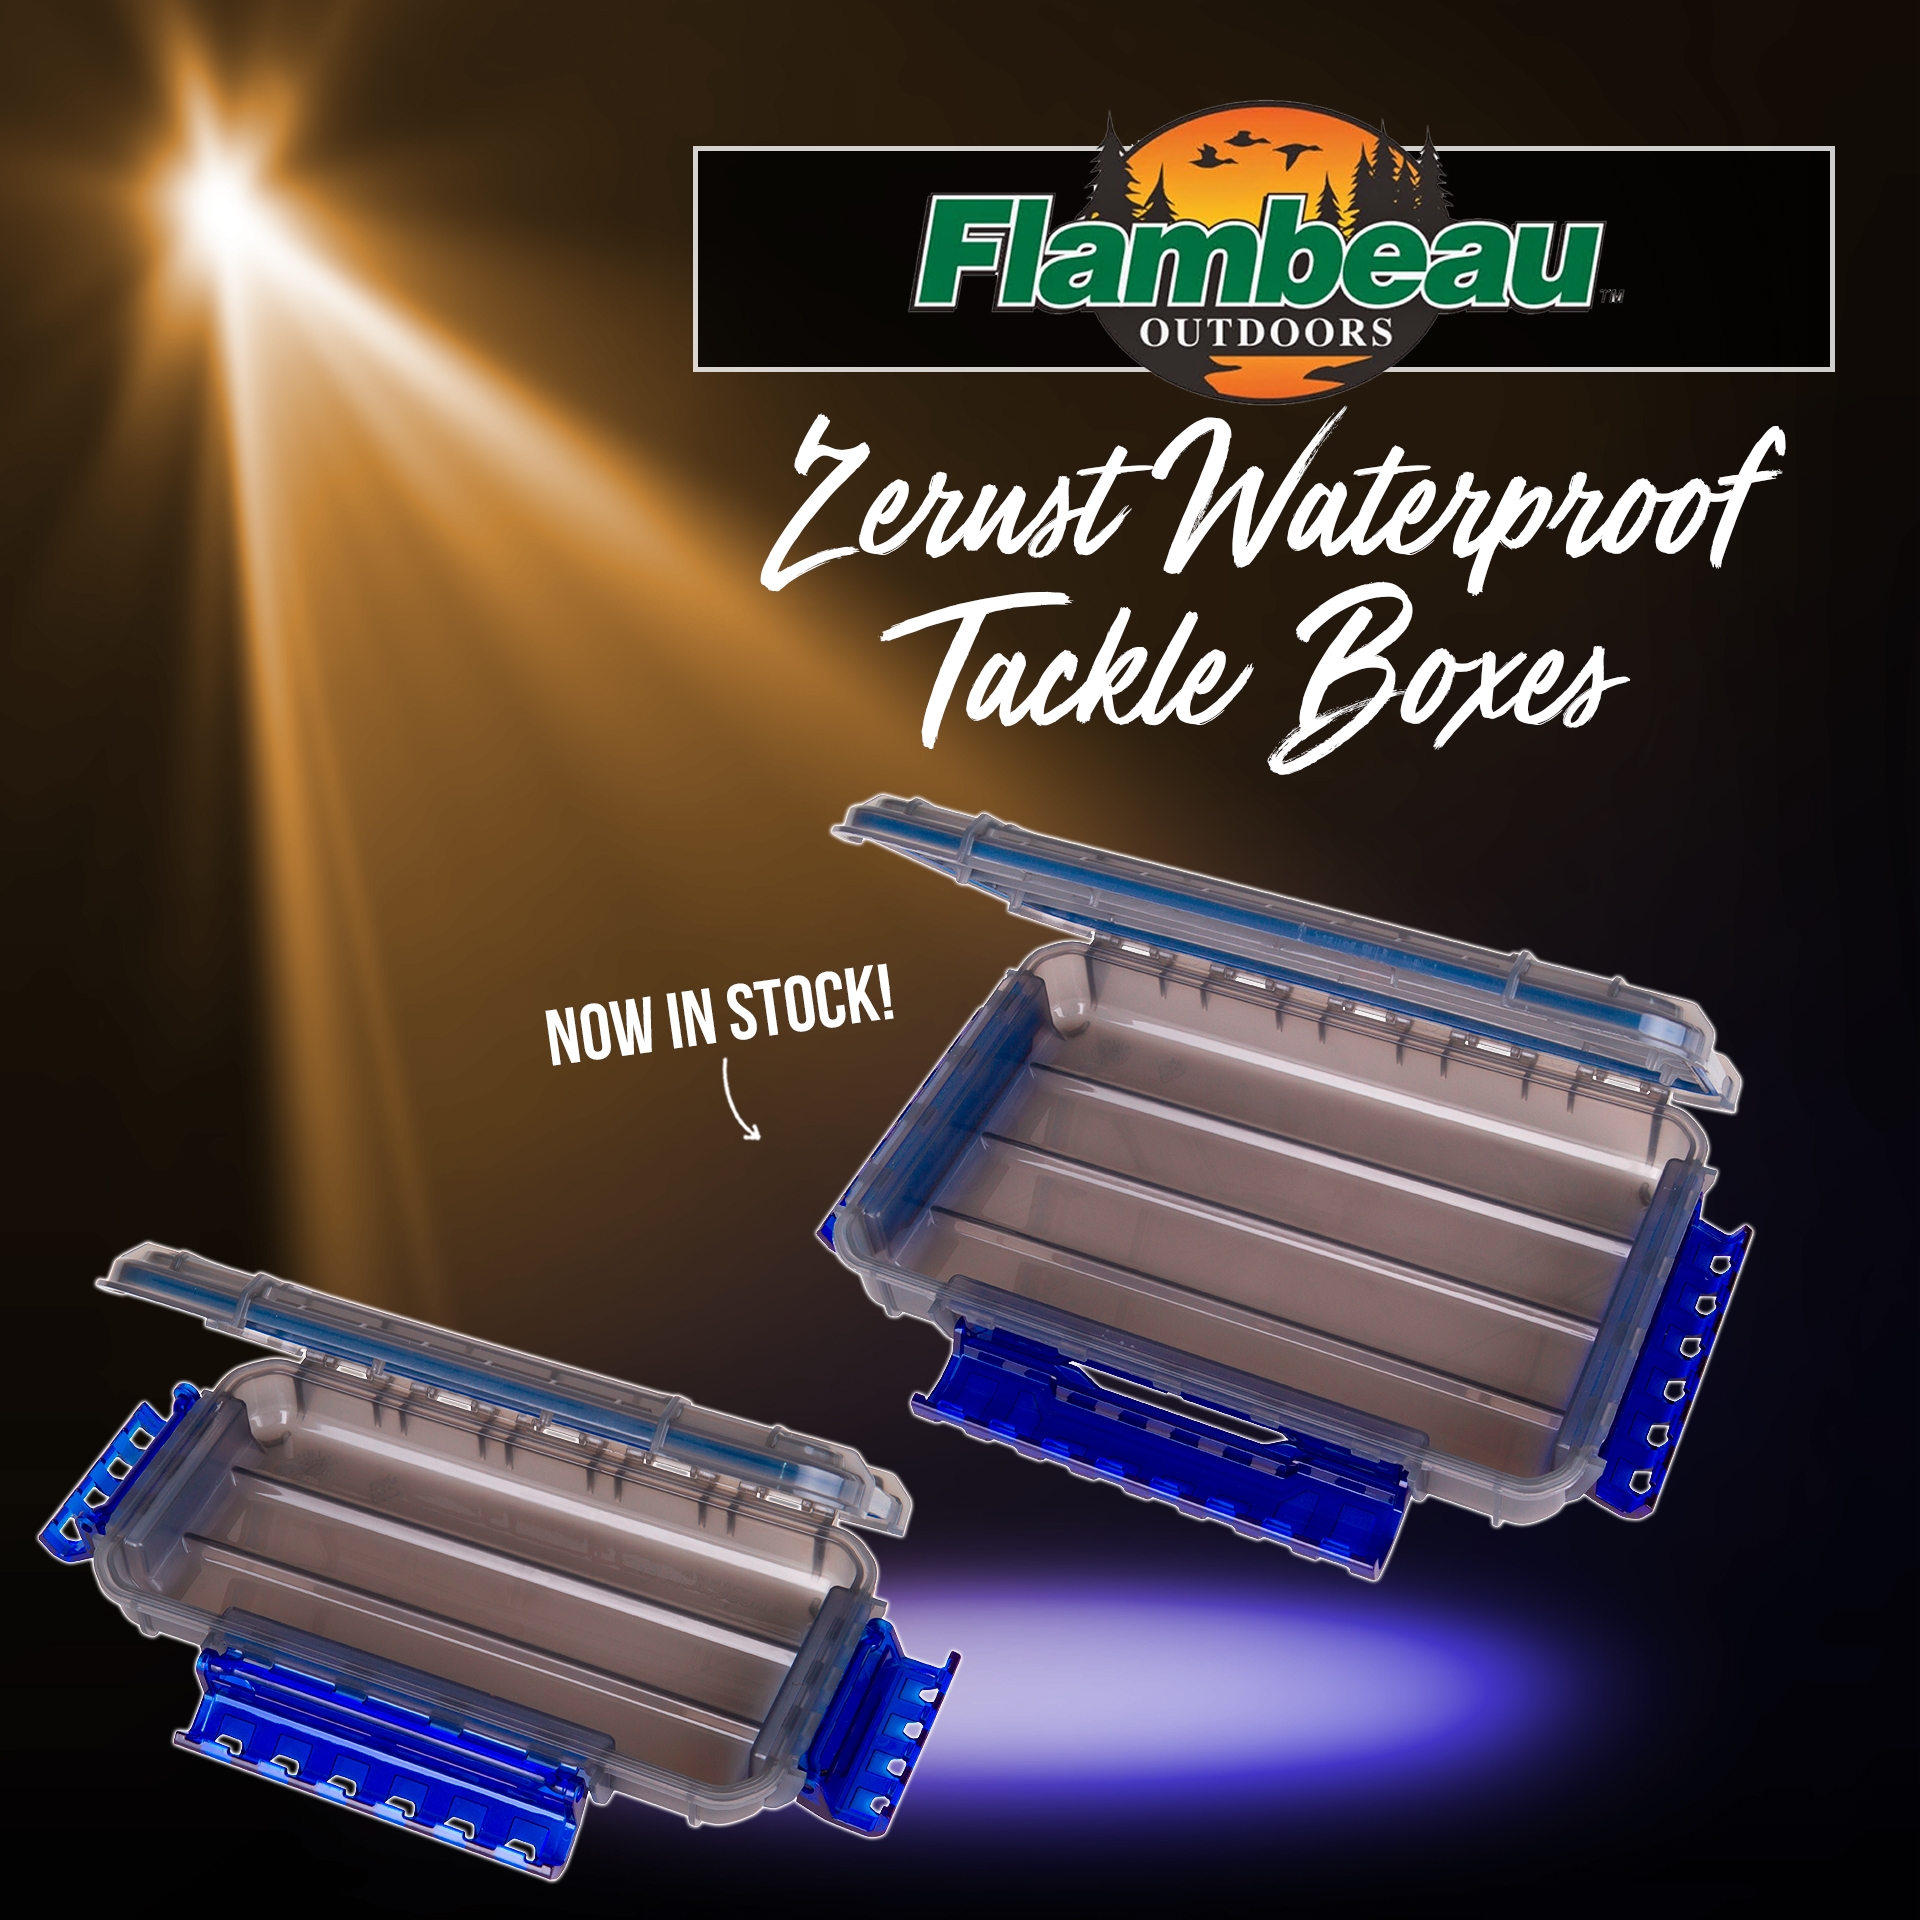 New - Flambeau Zerust Waterproof Tackle Boxes